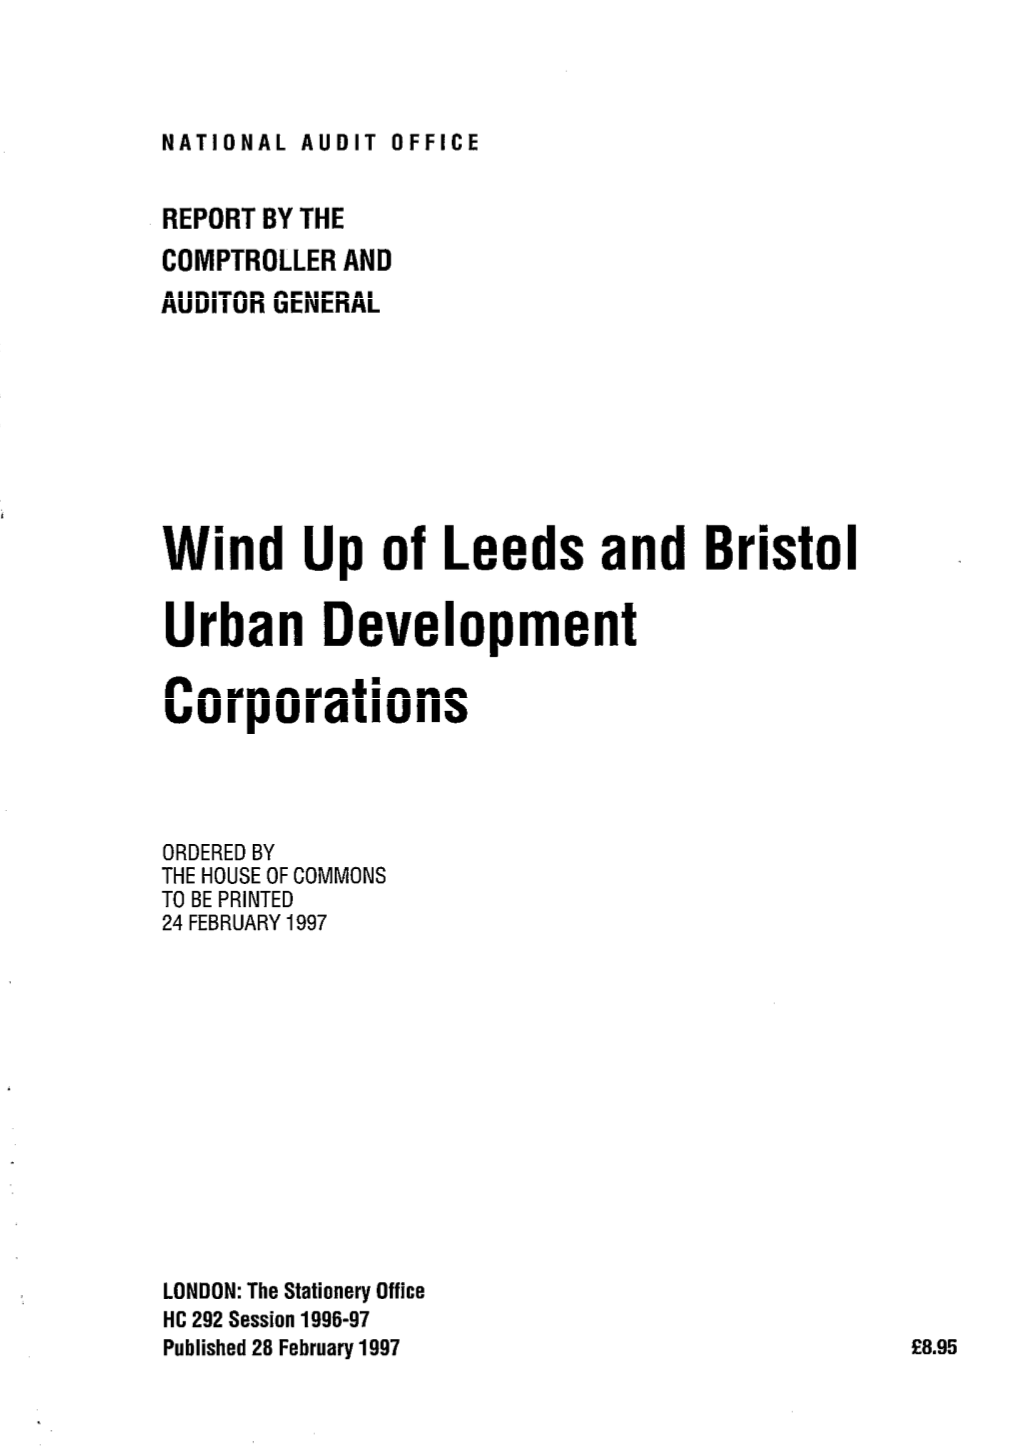 Wind up of Leeds and Bristol Urban Development Corporations